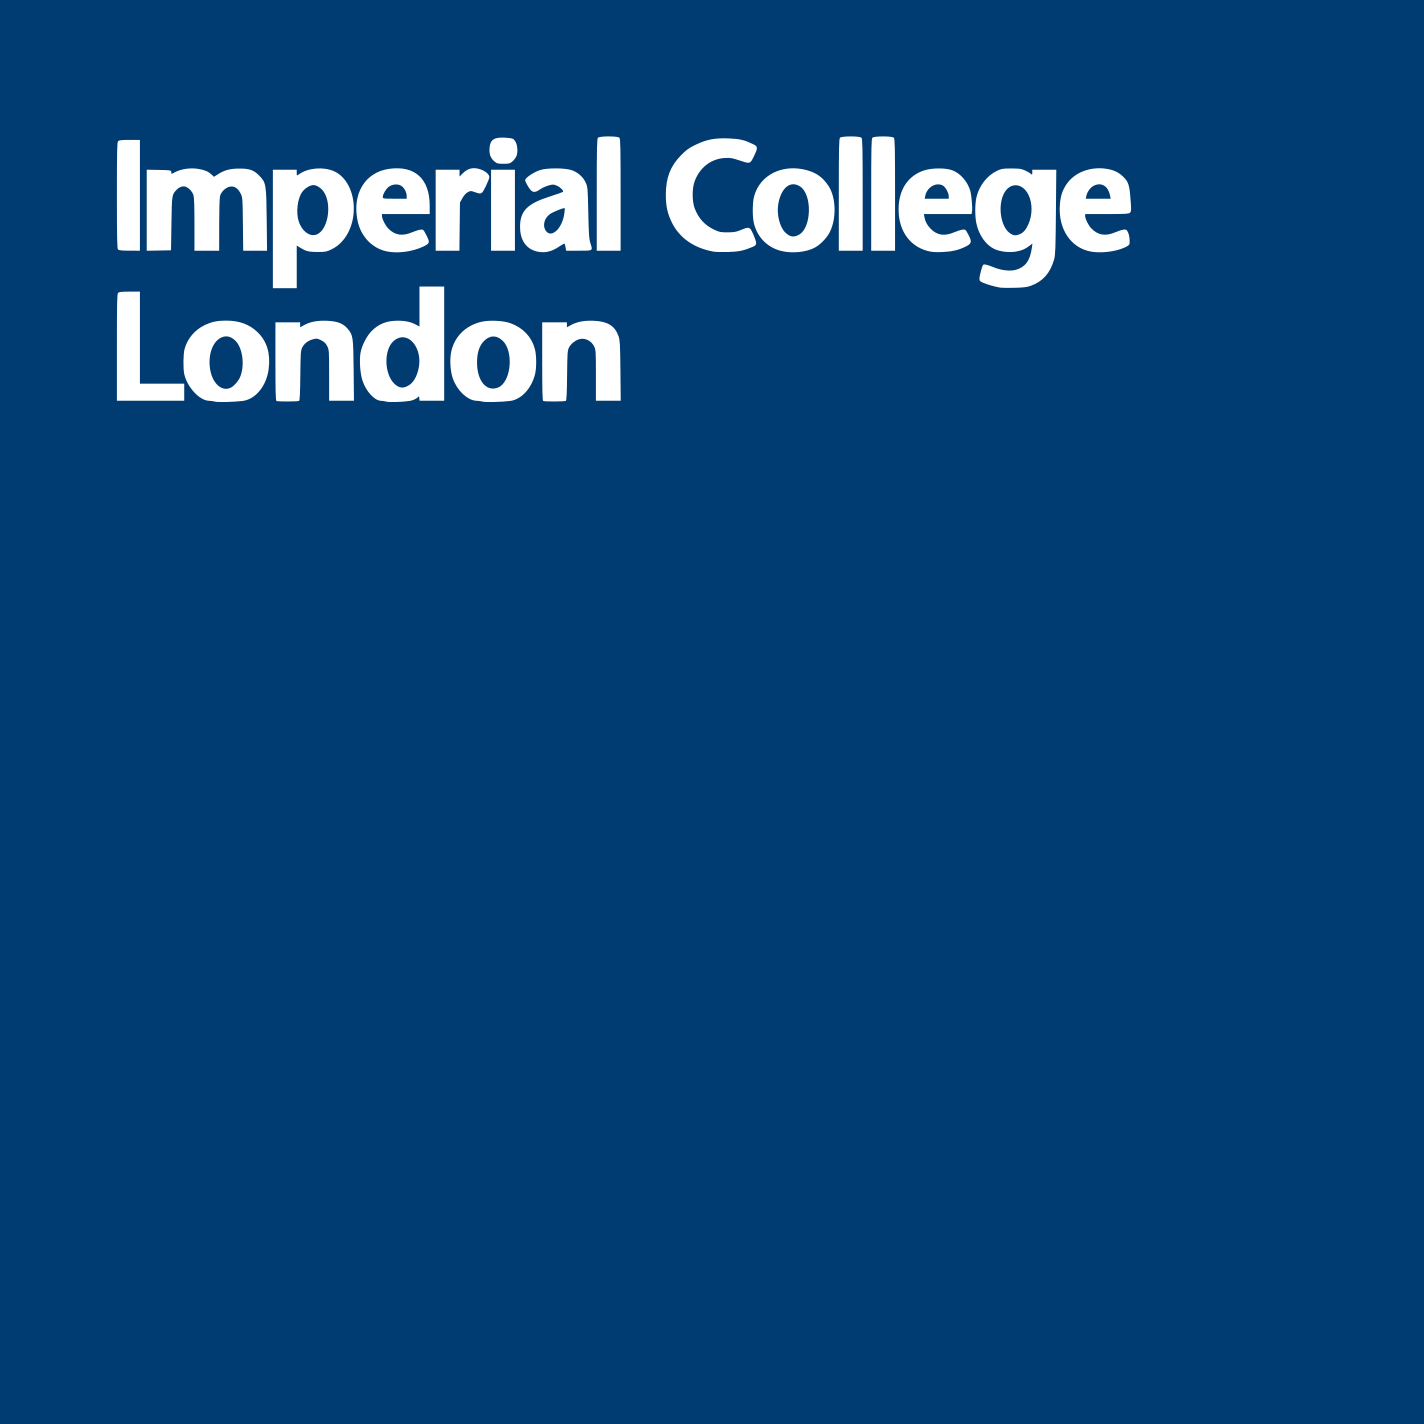 Imperial College logo